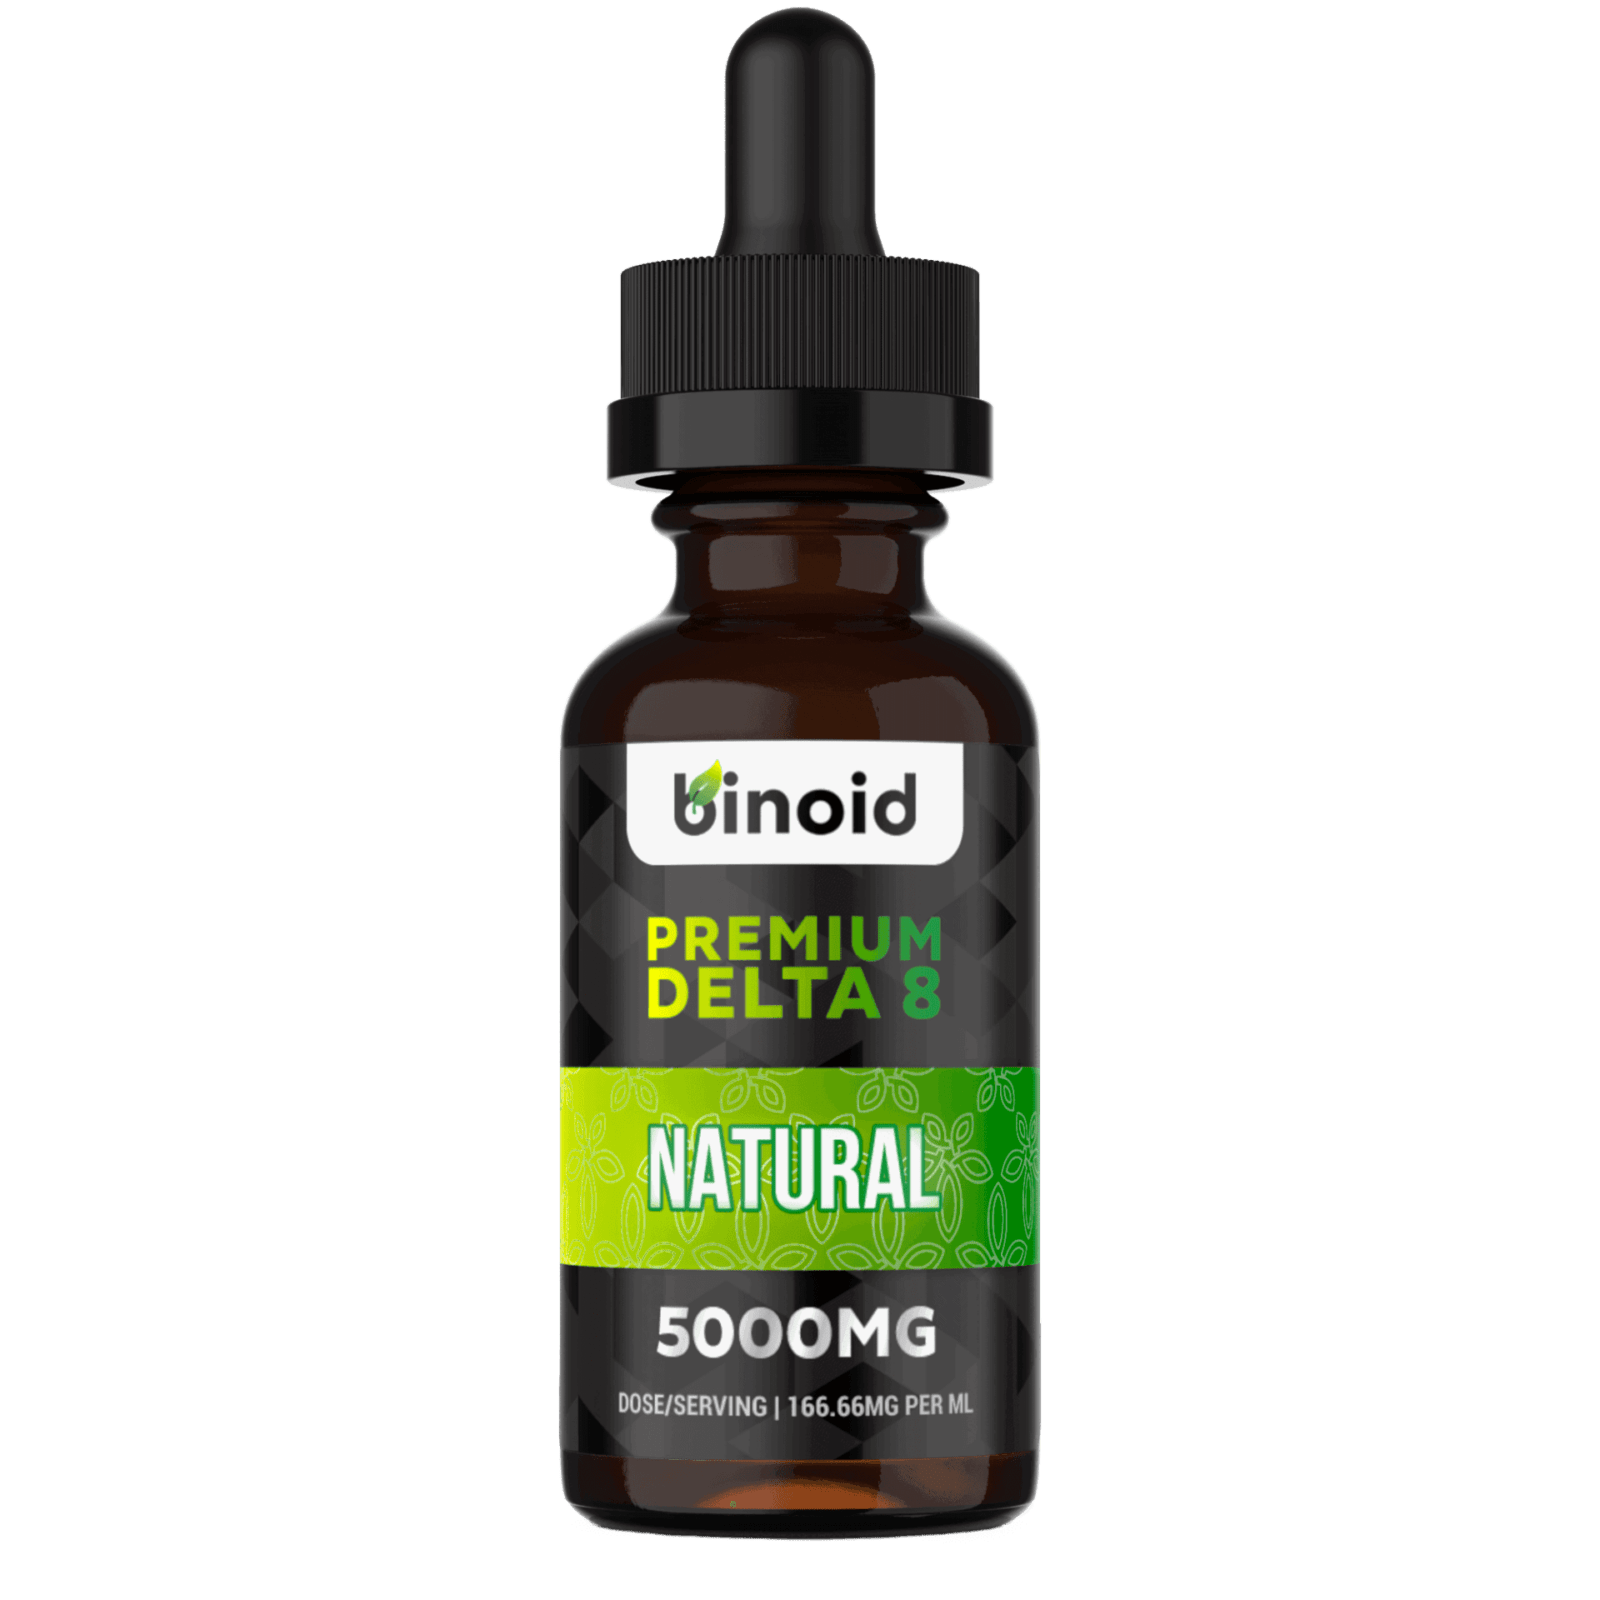 Binoid Delta 8 Tinctures Review